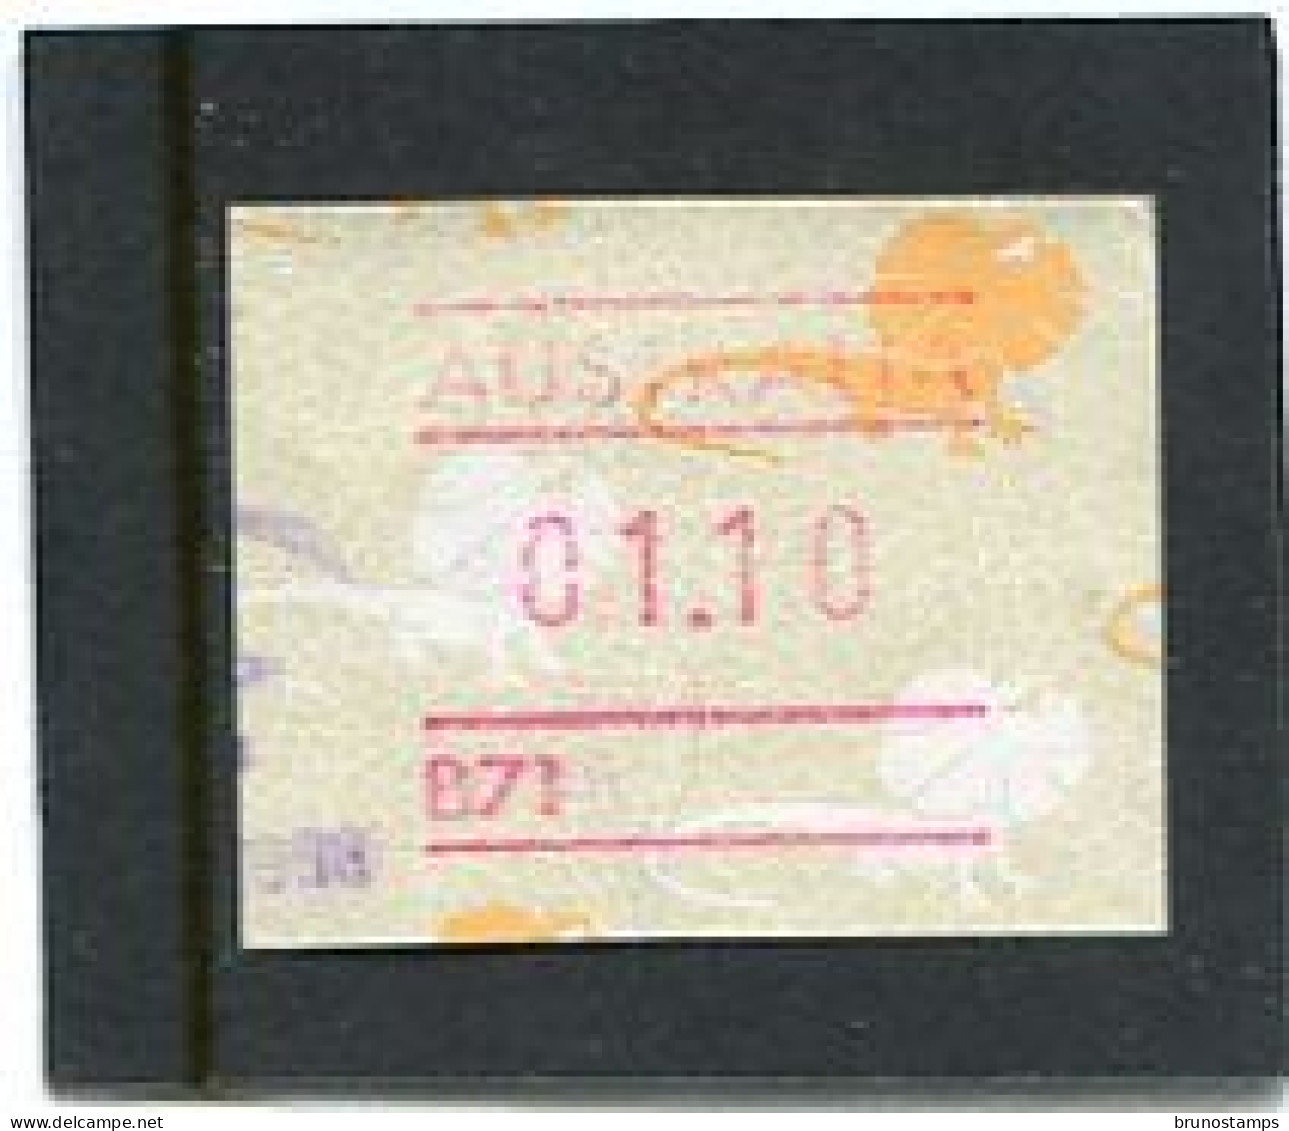 AUSTRALIA - 1989  1.10$  FRAMA  LIZARD   NO POSTCODE  B71  FINE USED - Vignette [ATM]